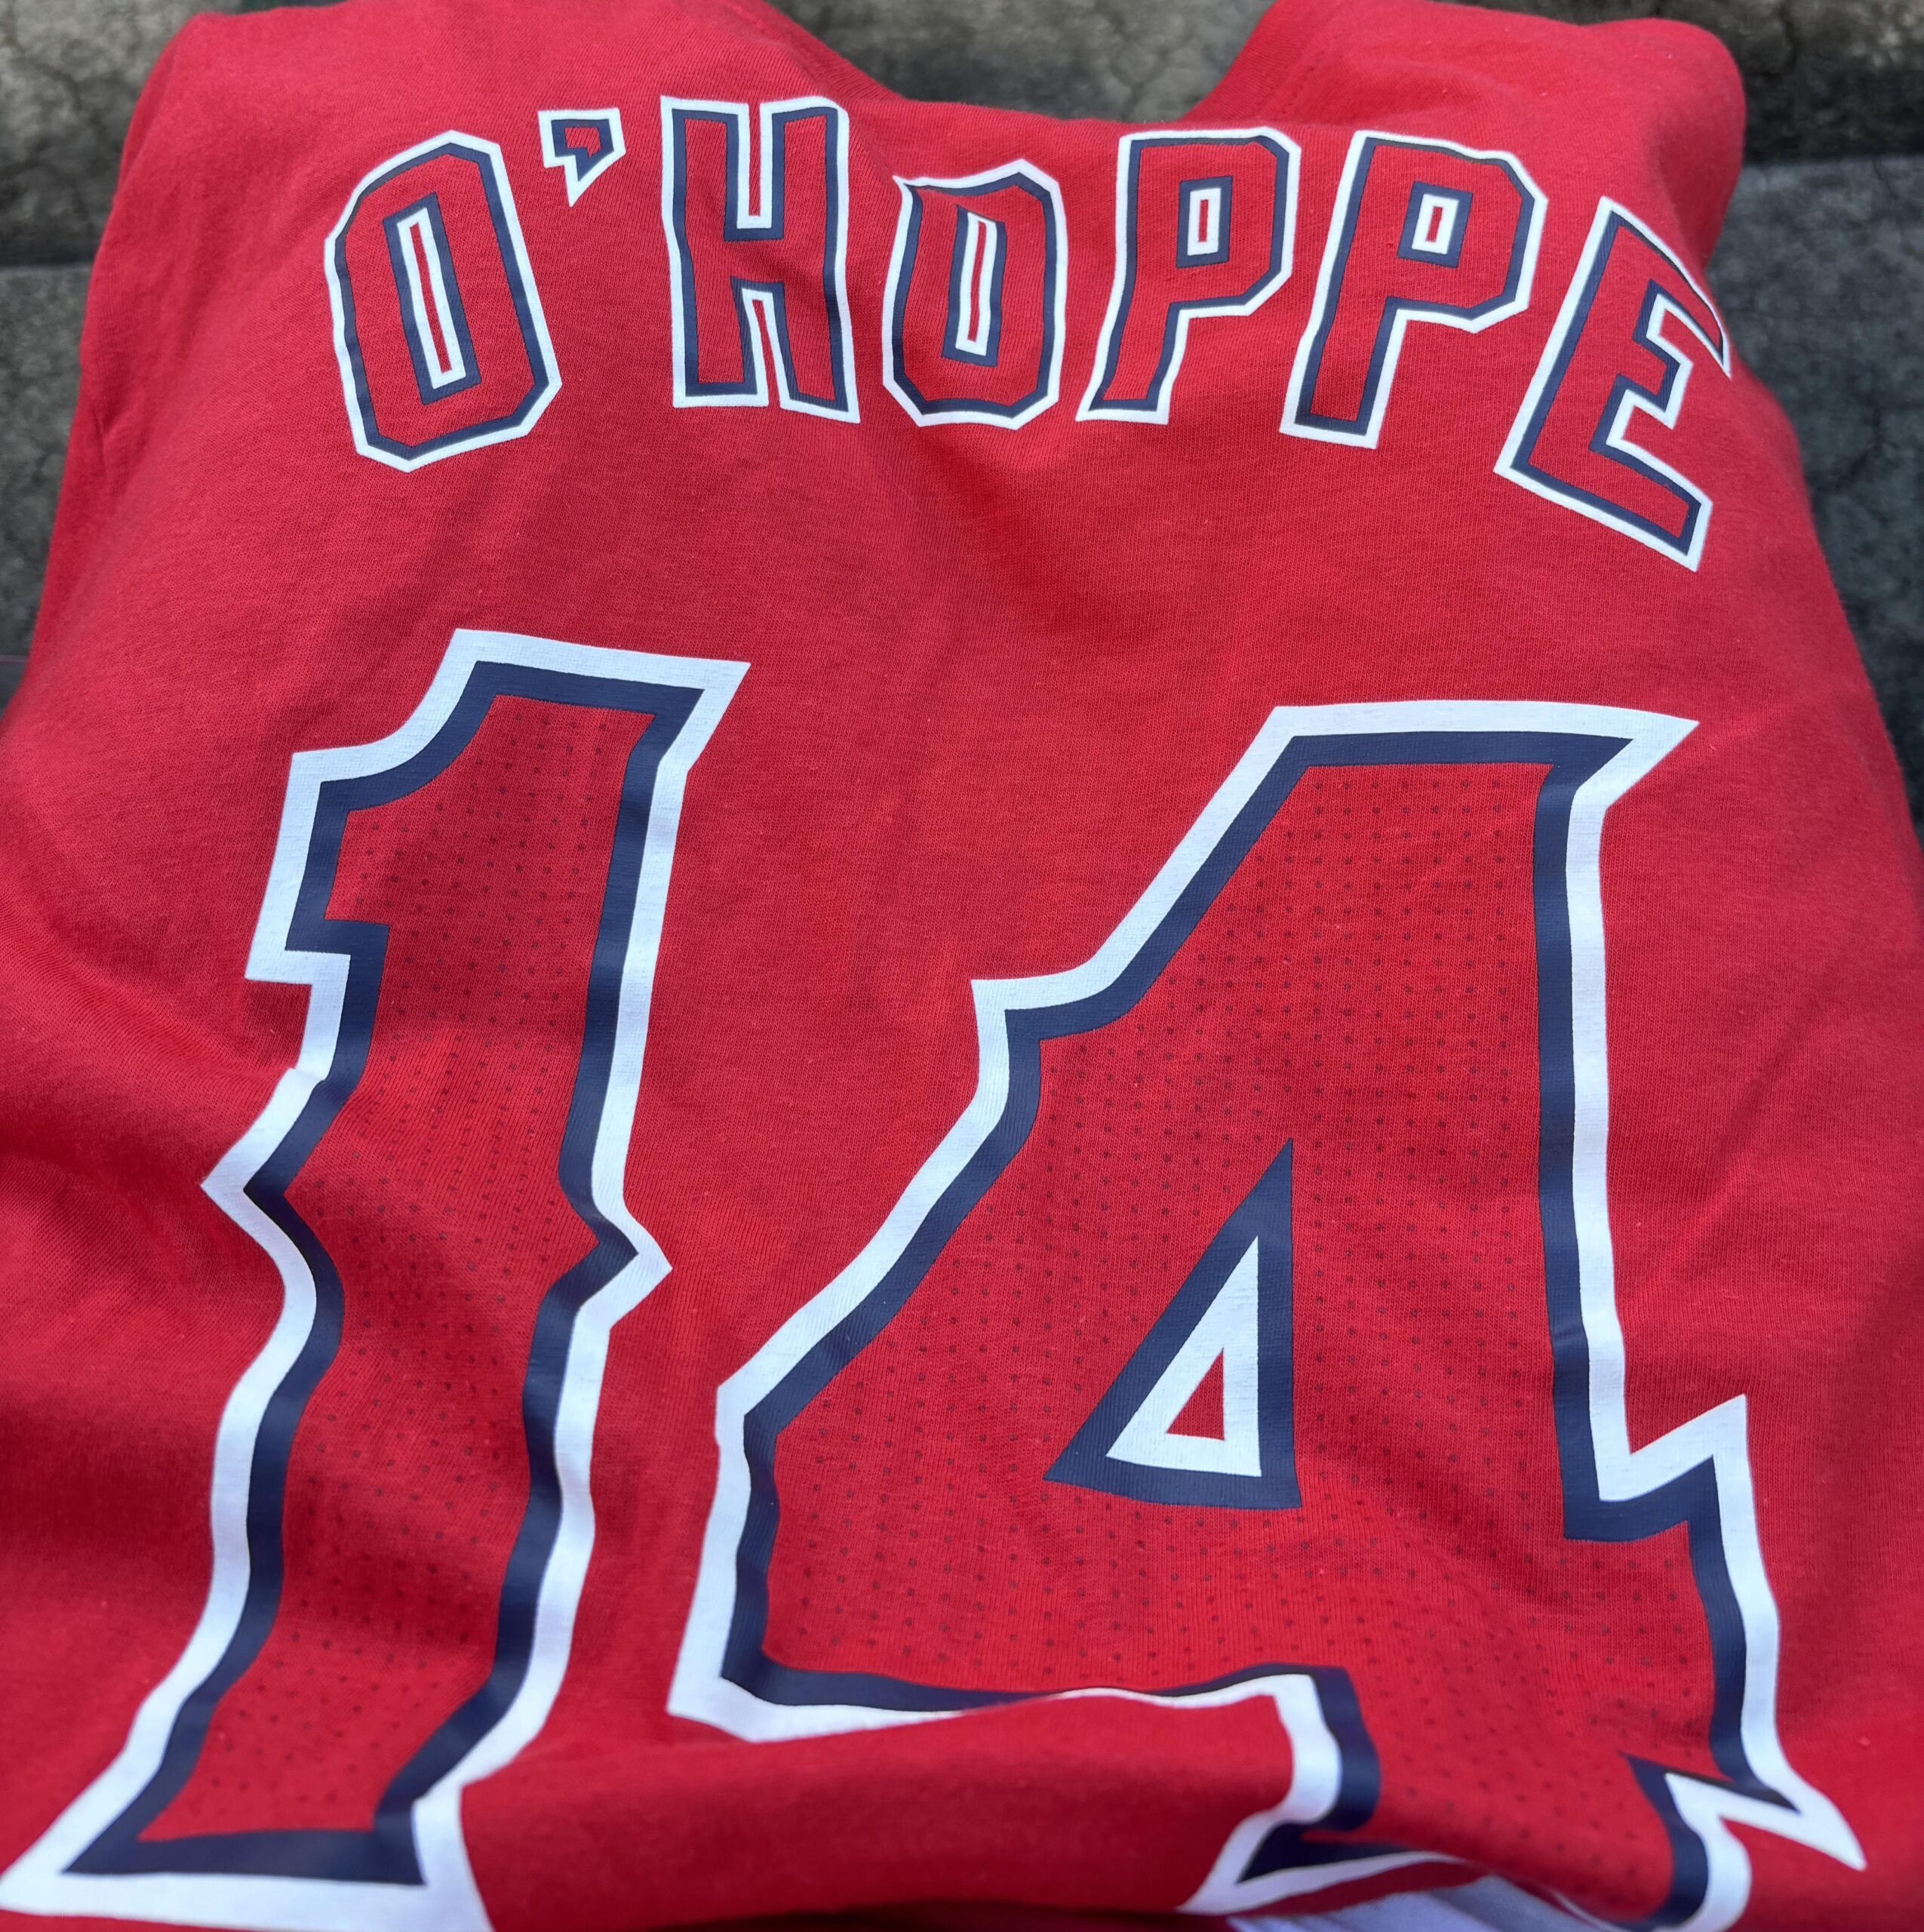 O’Hoppe t-shirt at team store